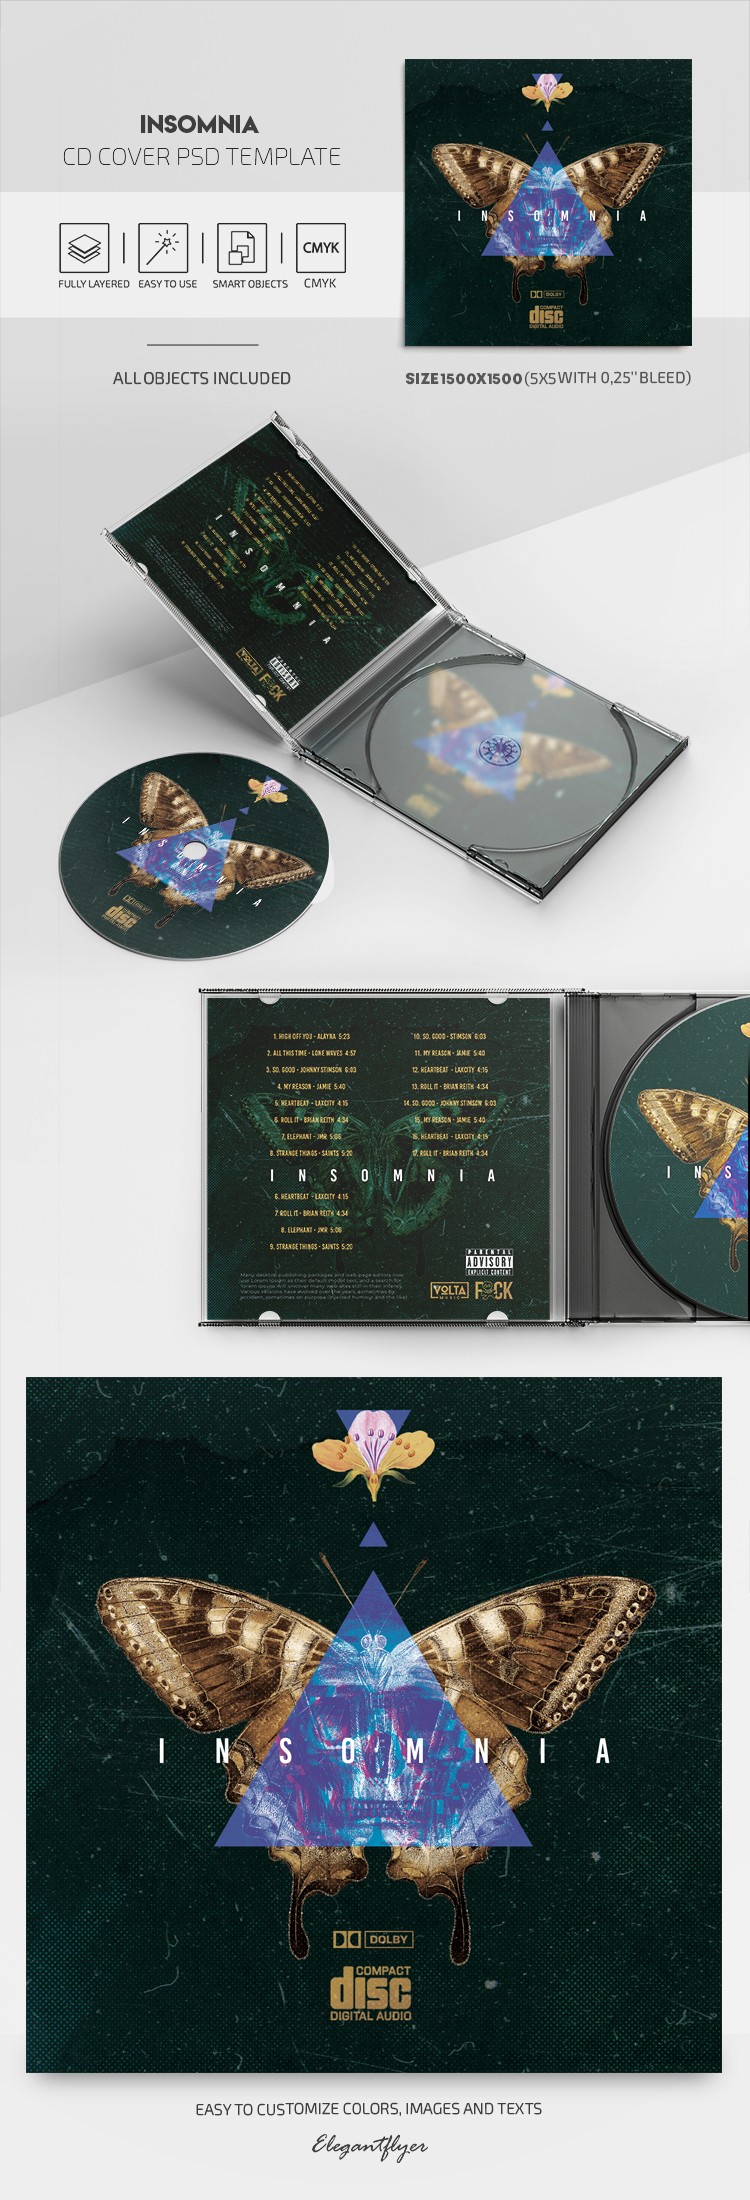 Insomnia CD Cover by ElegantFlyer